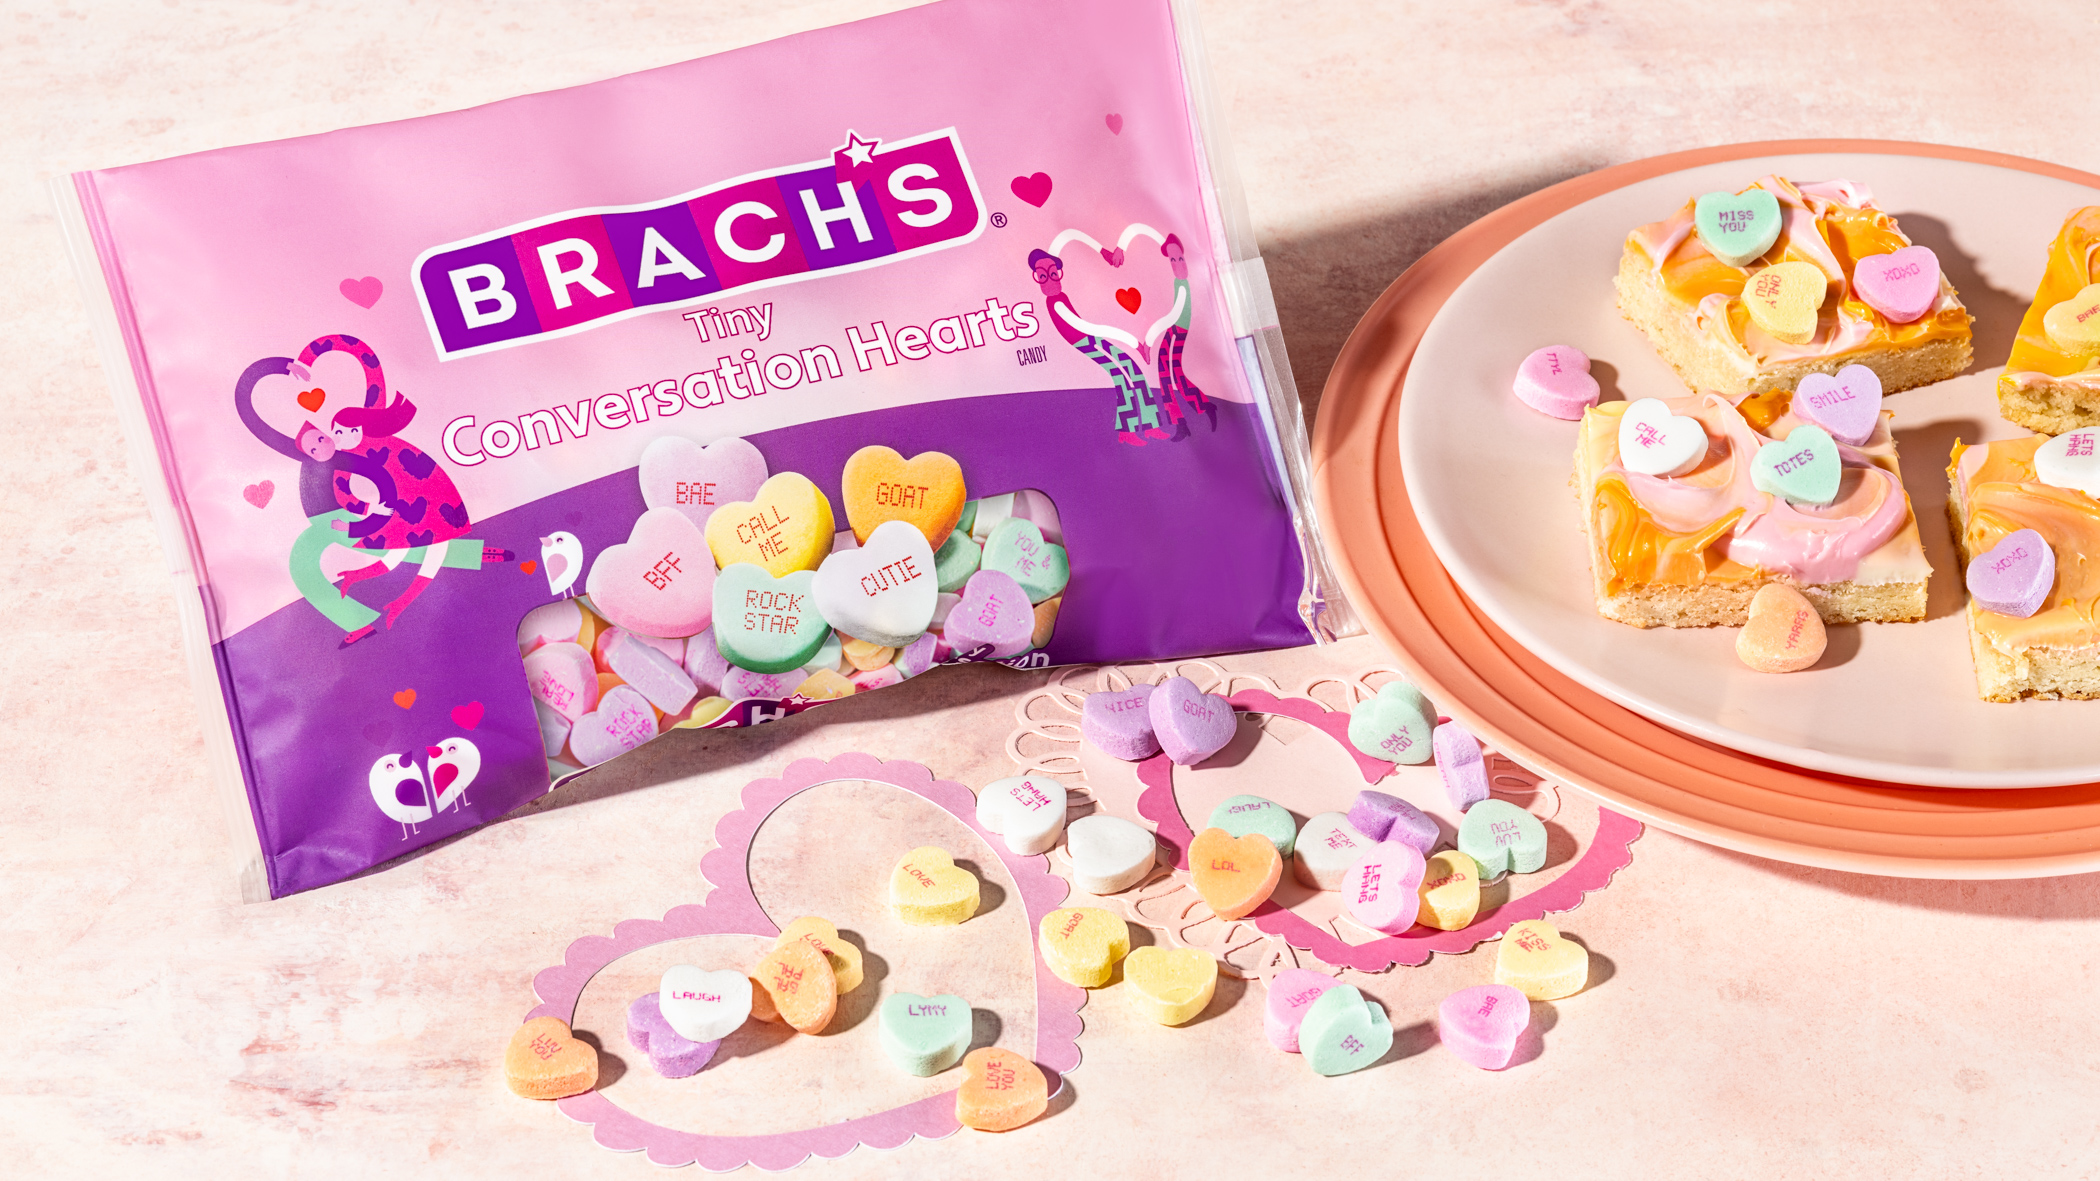 Brach's® Wisecracks Conversation Hearts Candy, 8.5 oz - King Soopers